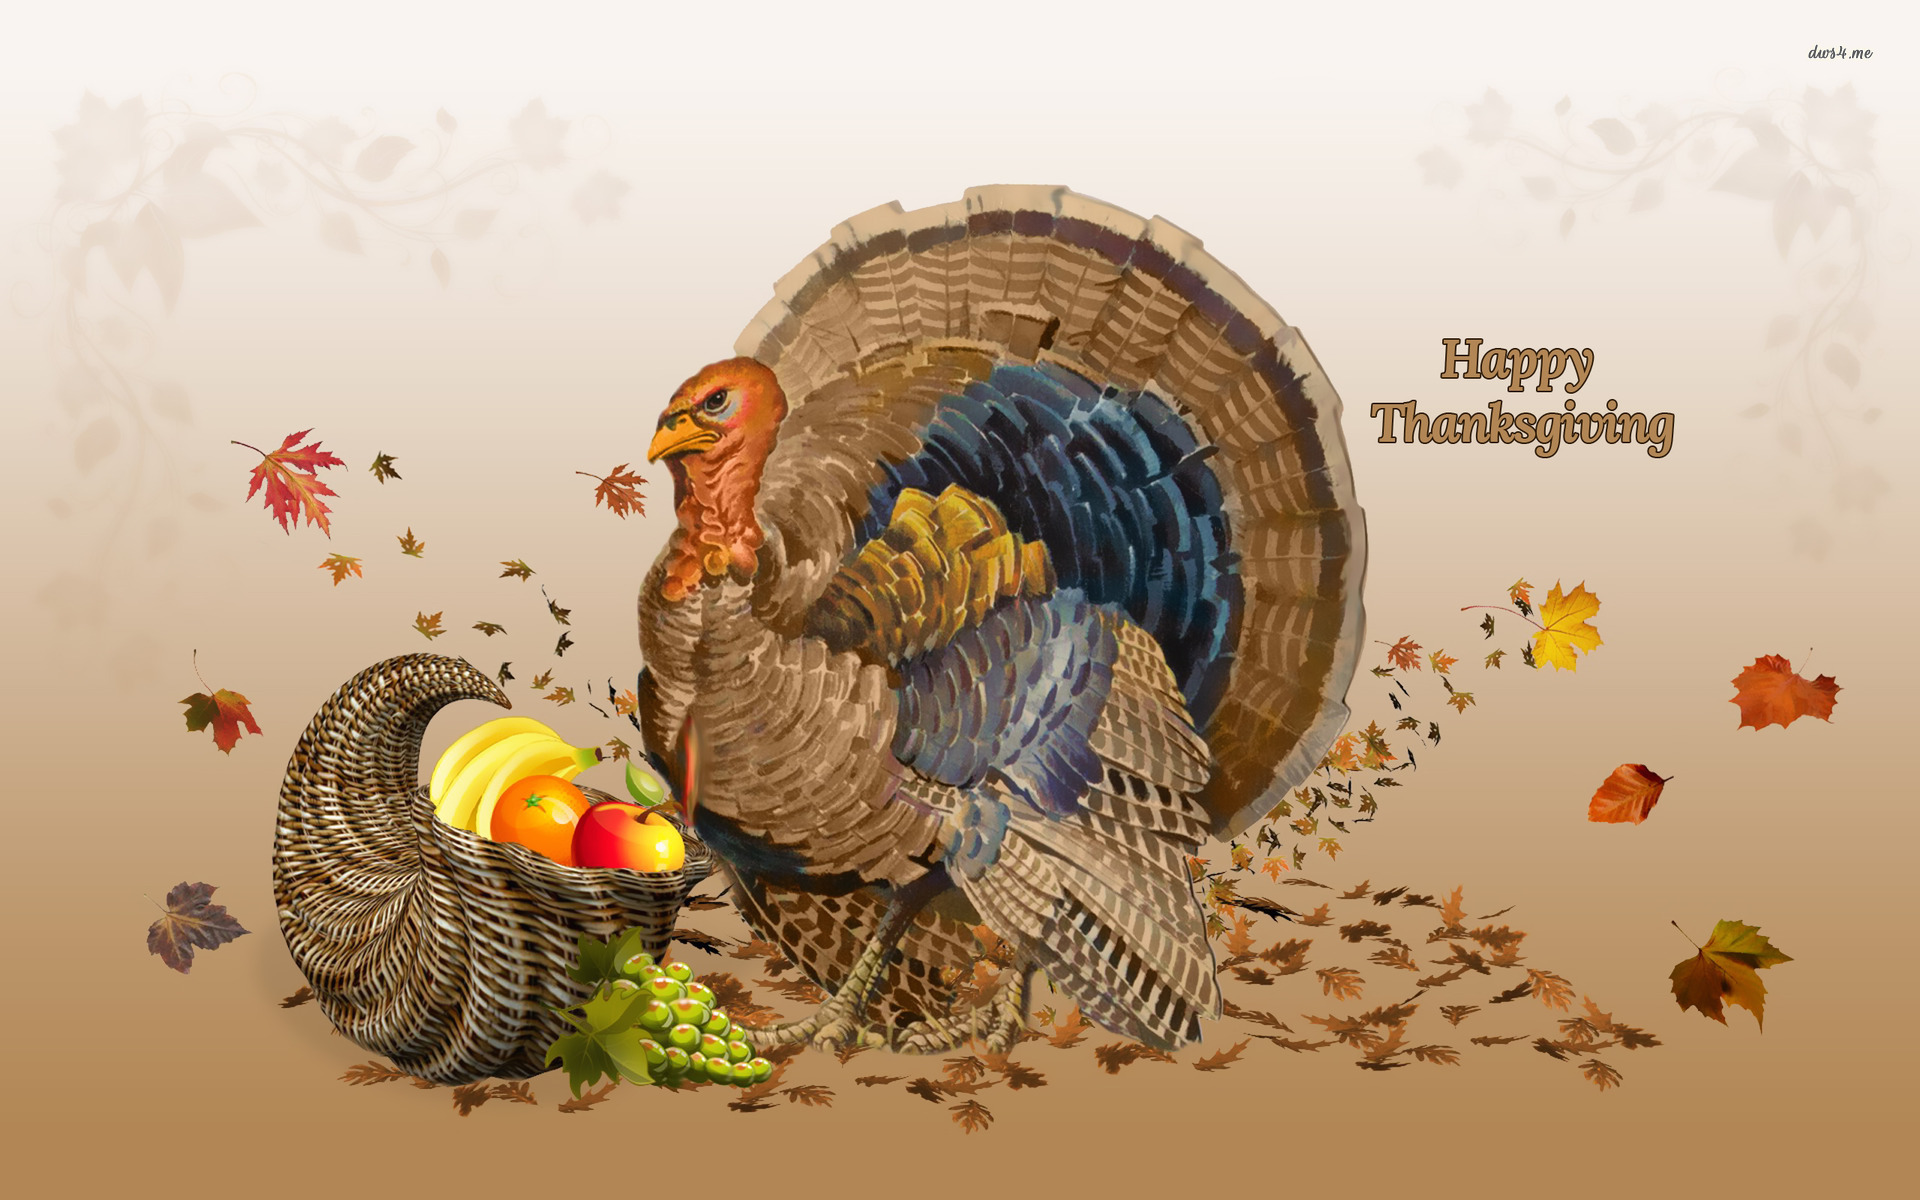 Happy Thanksgiving wallpaper